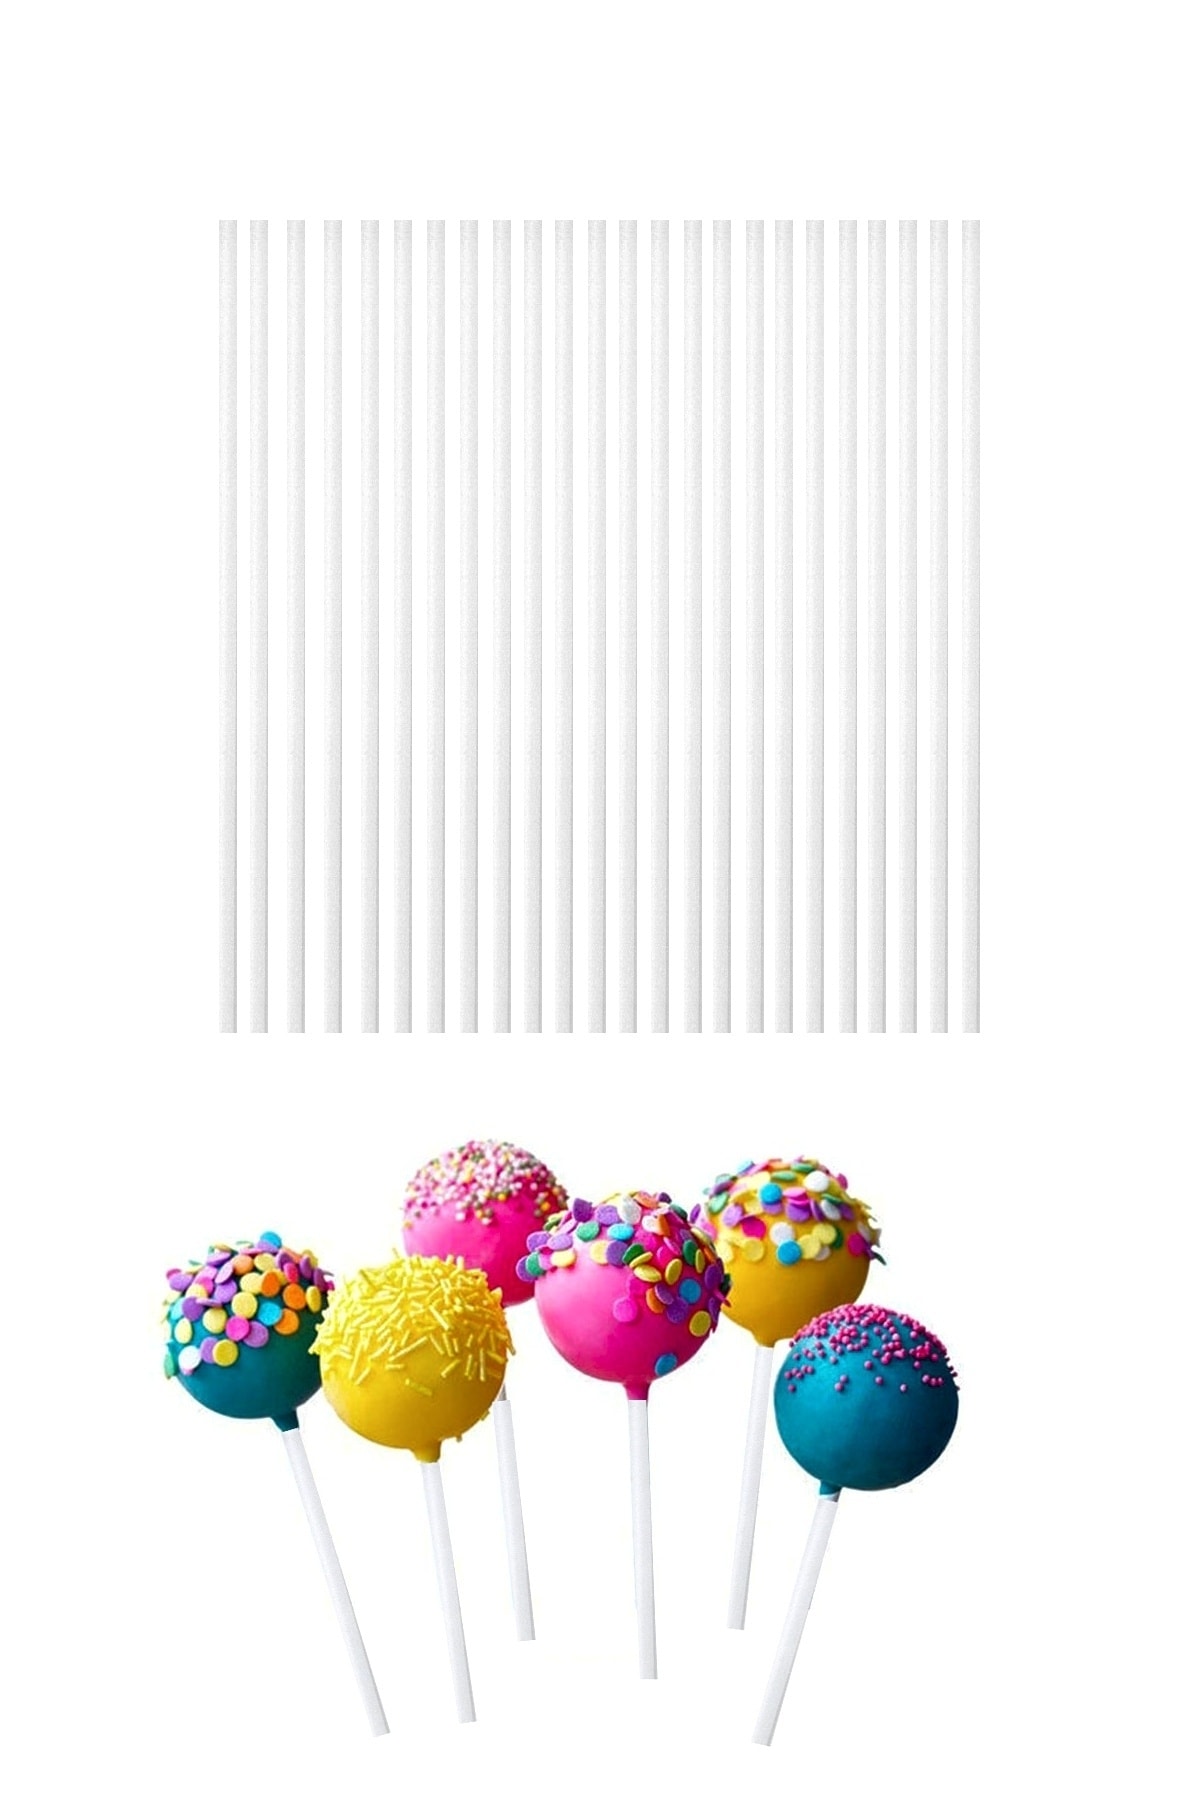 YD Party Supplies Şekerleme , Lolipop Ve Cakepops Çubuğu Beyaz Renk 50 Adet 15 Cm